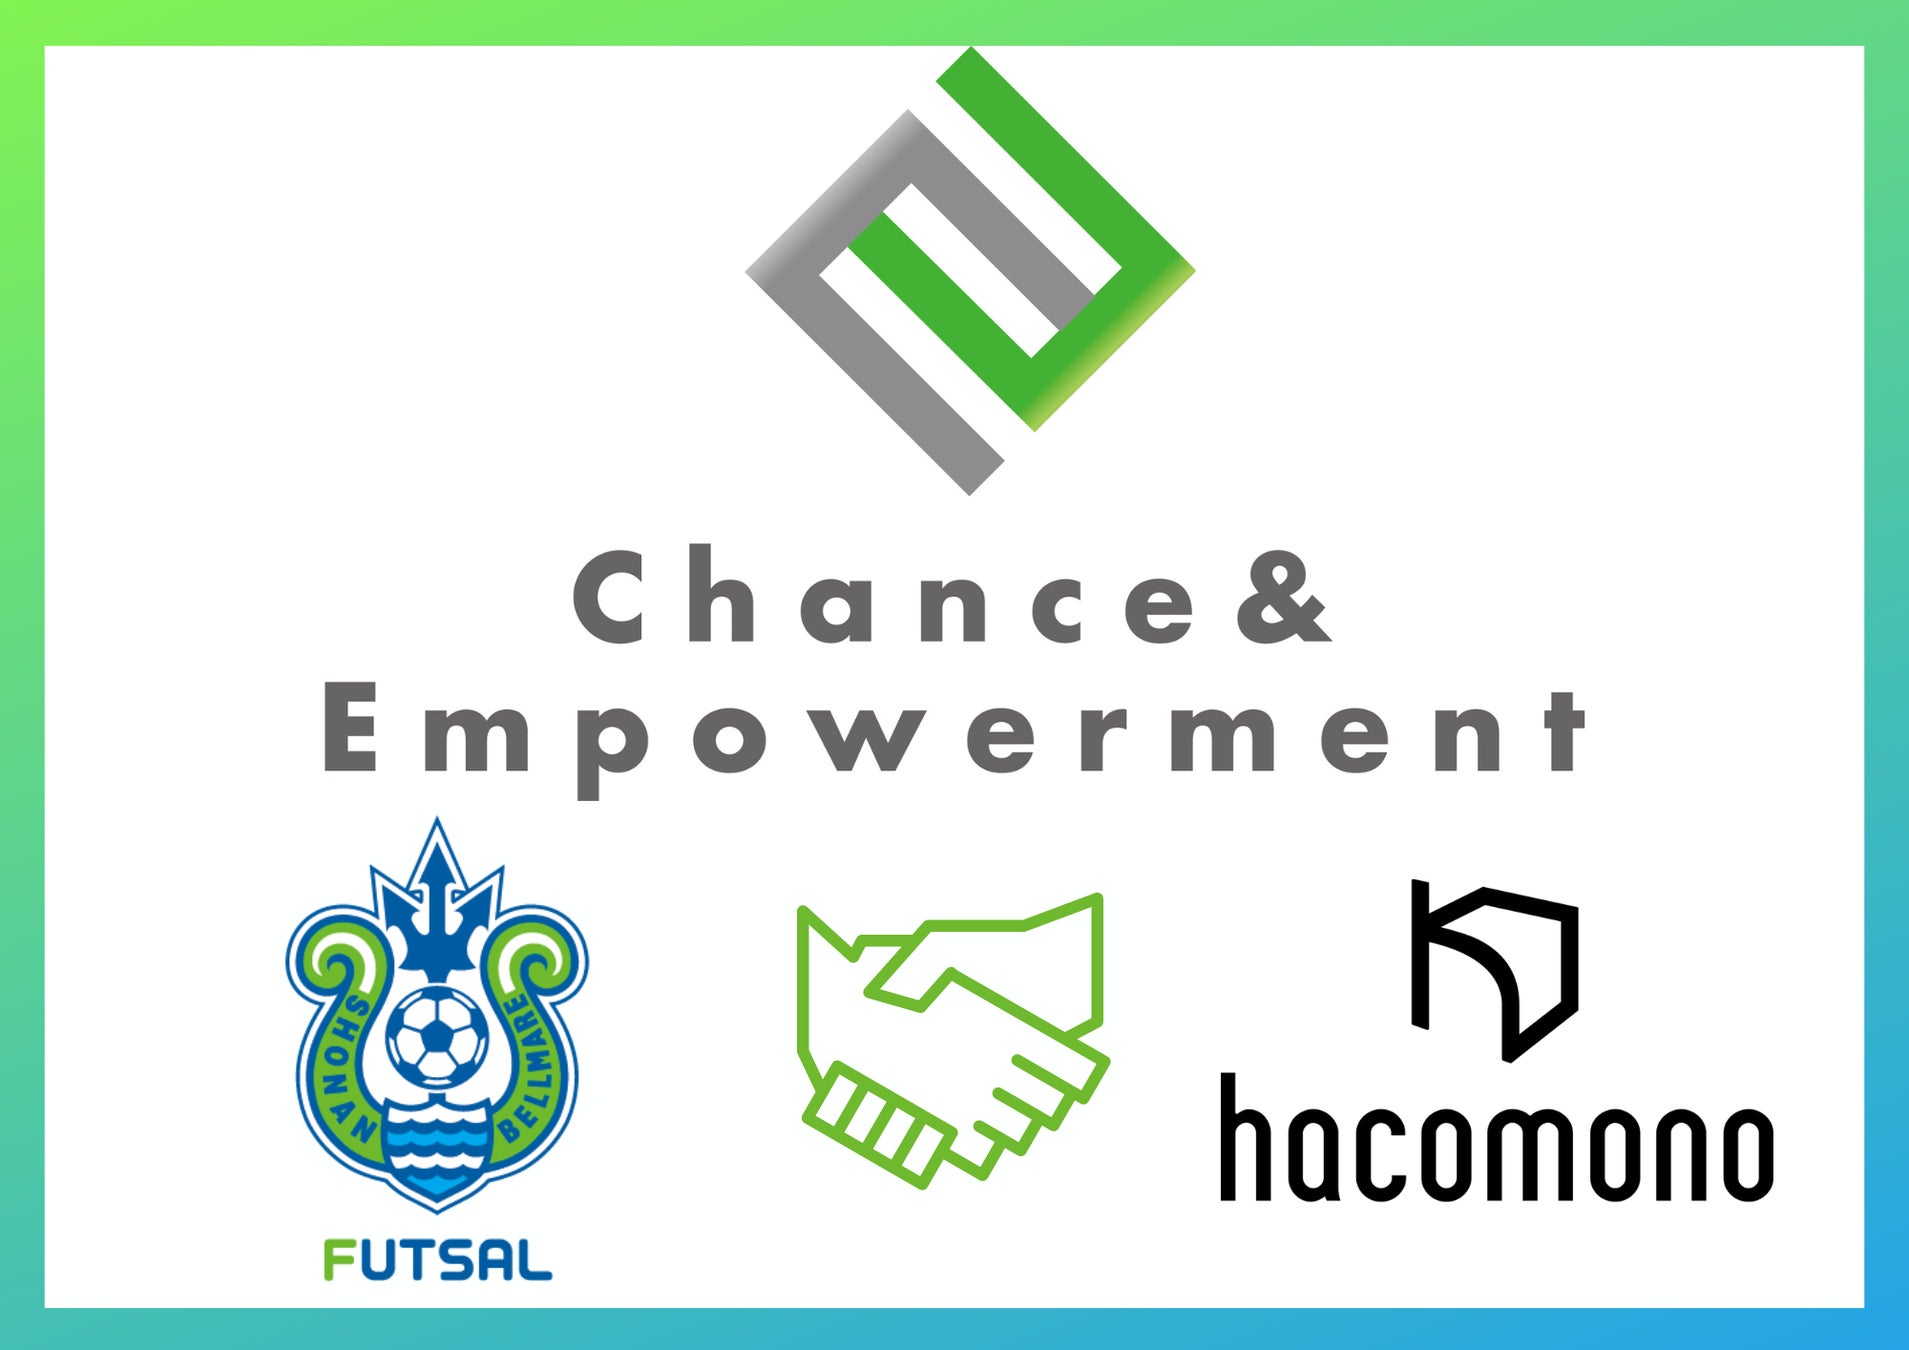 【Chance&Empowerment project】株式会社hacomono様とChance&Empowerment パートナー締結のお知らせ